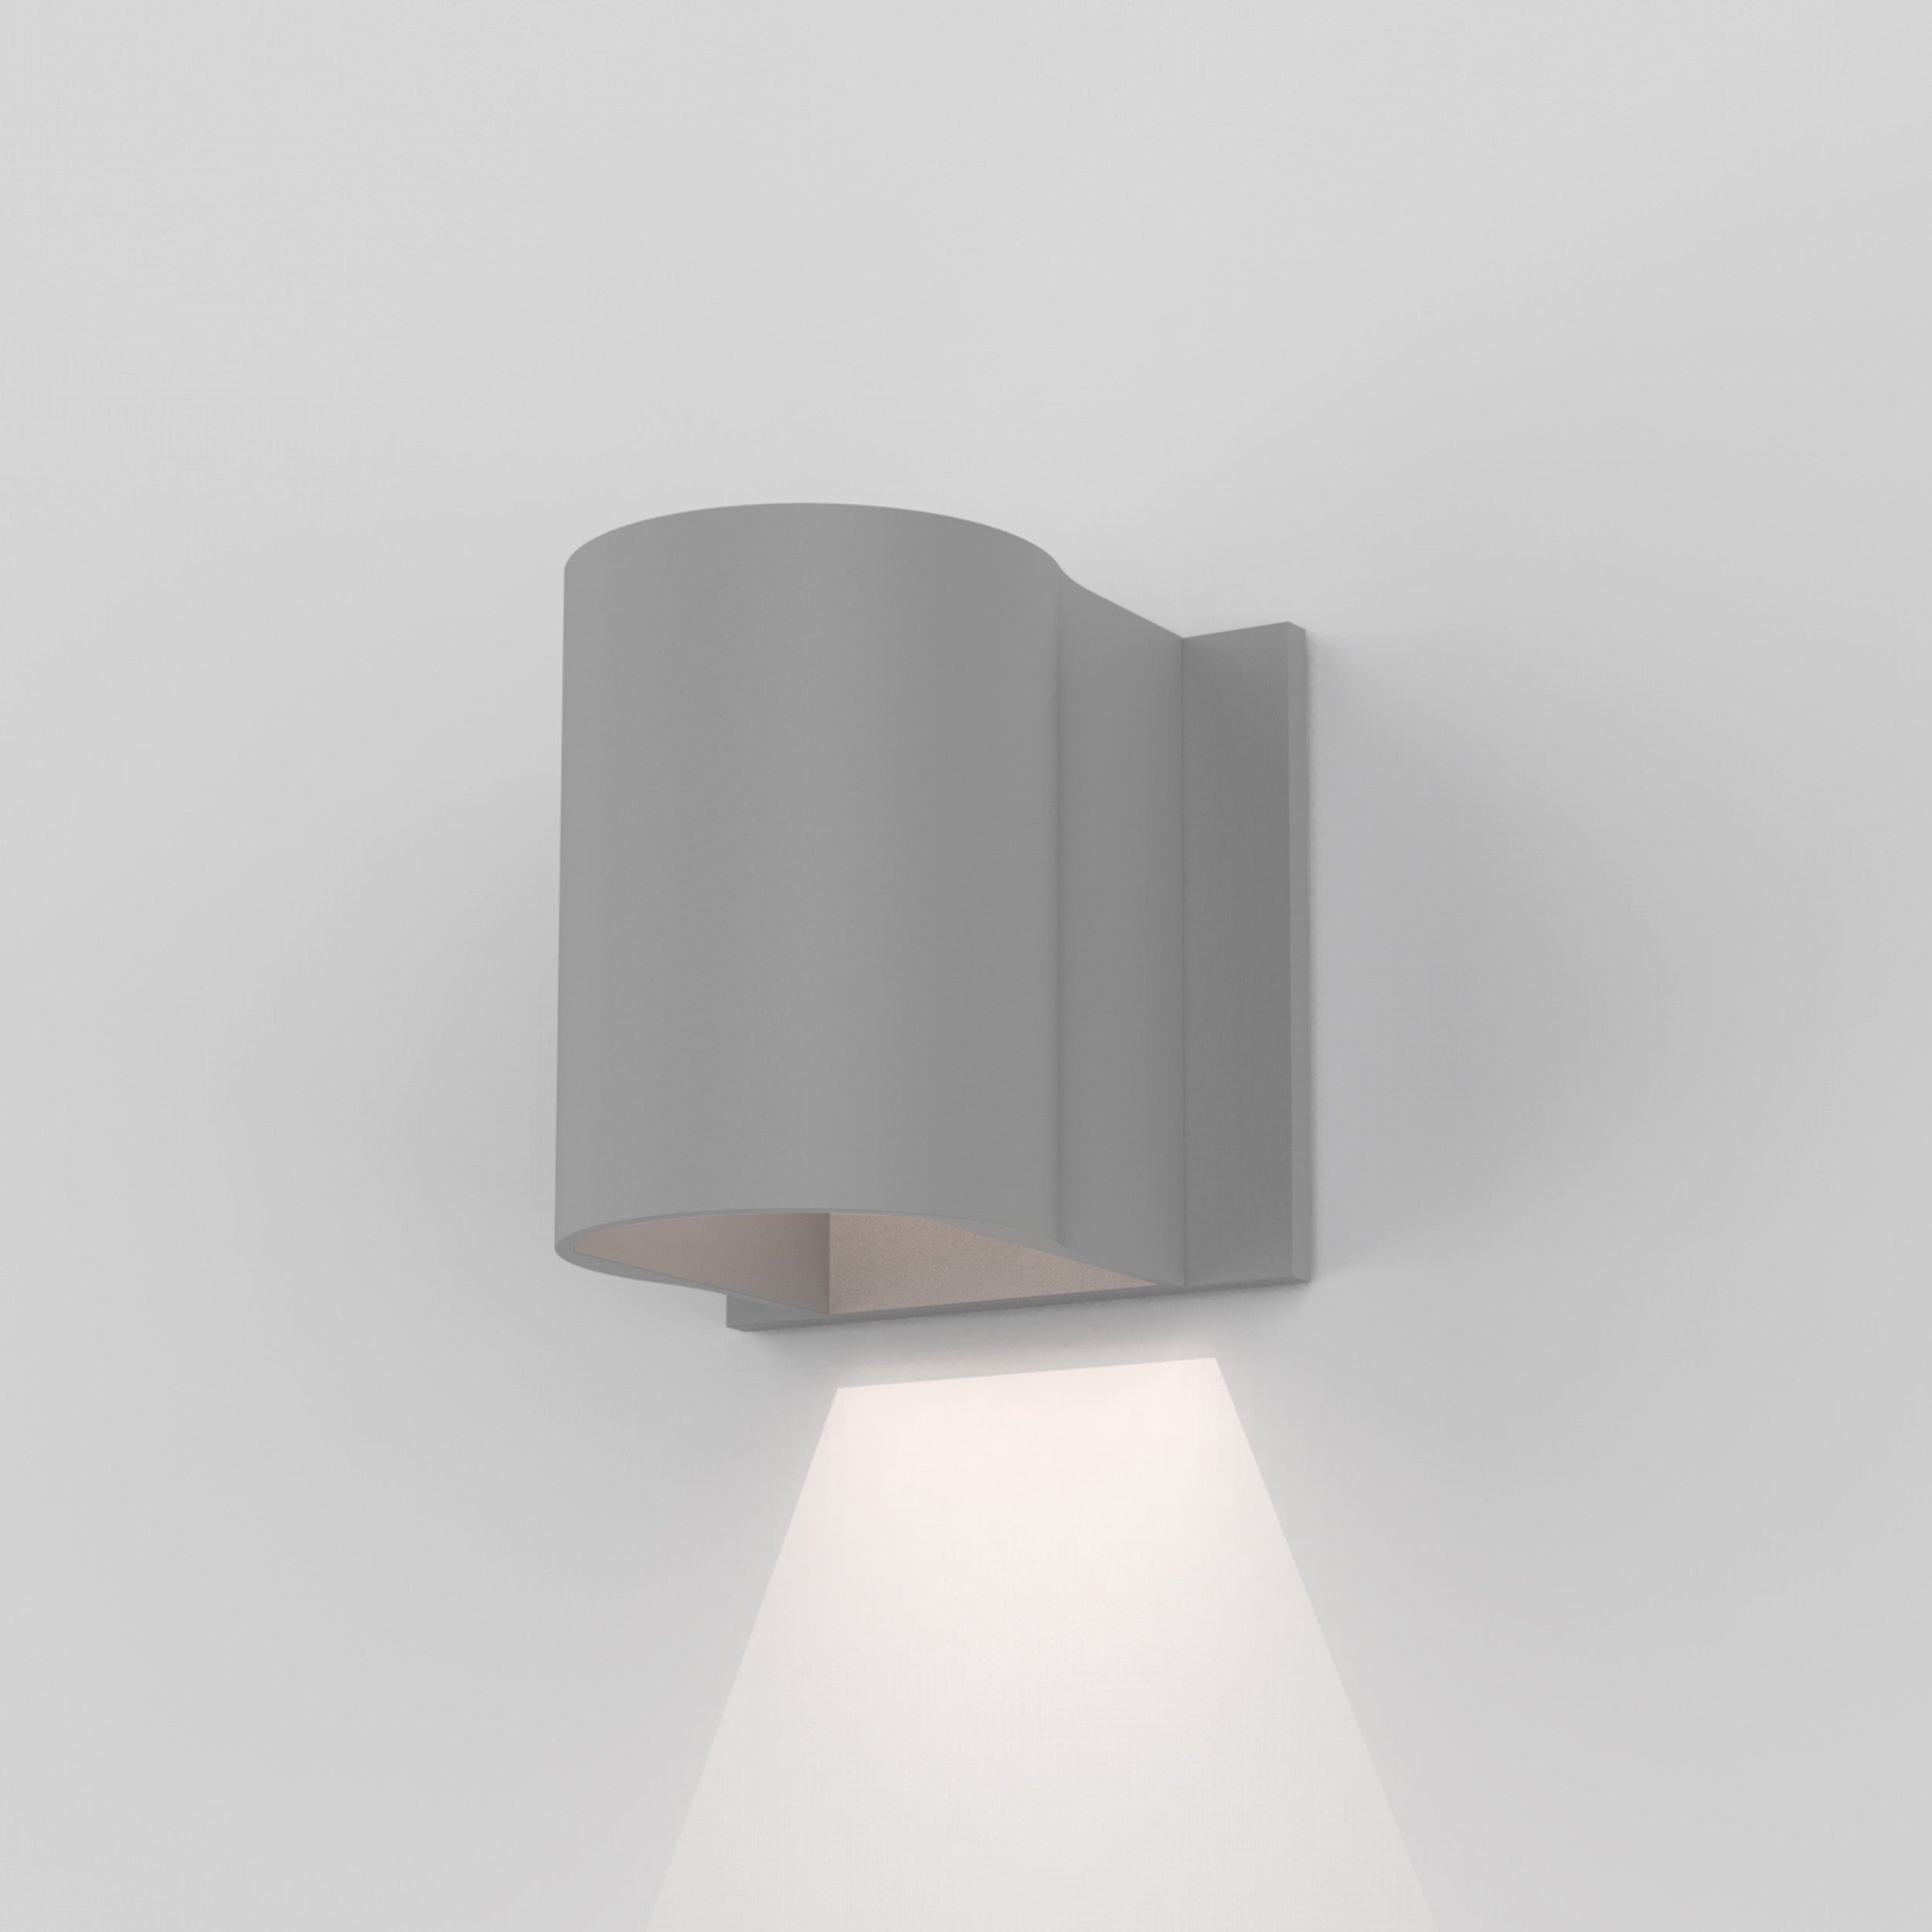 Astro Lighting Dunbar Wall Light Fixtures Astro Lighting 4.17x4.33x4.33 Textured Grey Yes (Integral), High Power LED